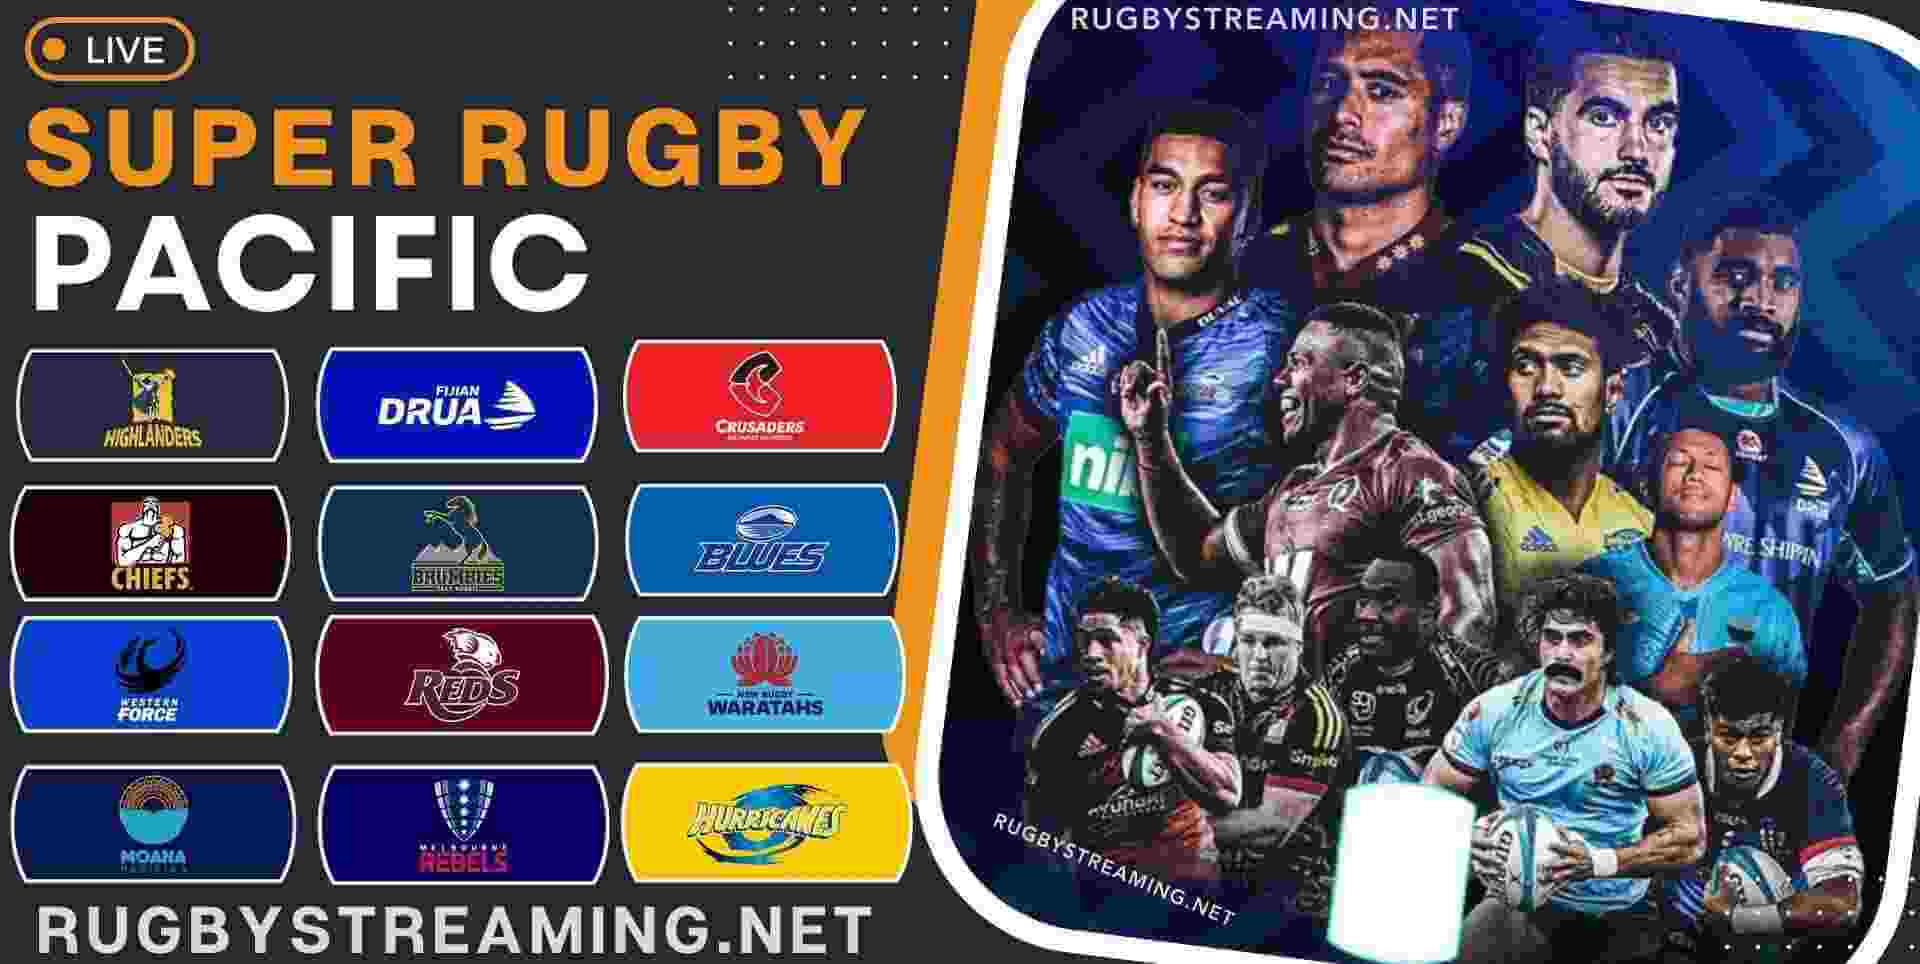 Moana Pasifika Vs Rebels Live Stream Rugby